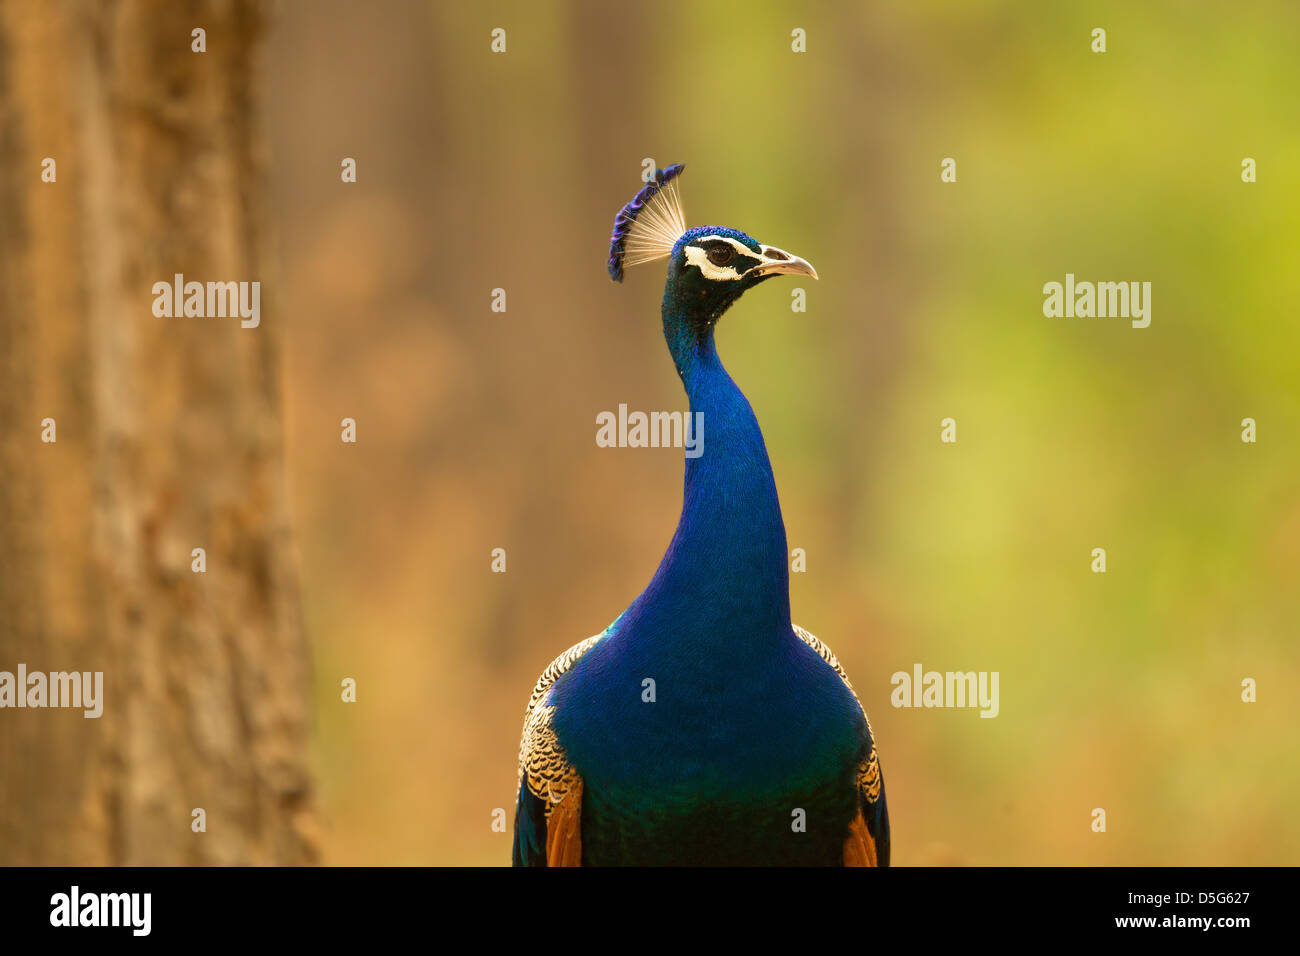 A peacock portrait Stock Photo